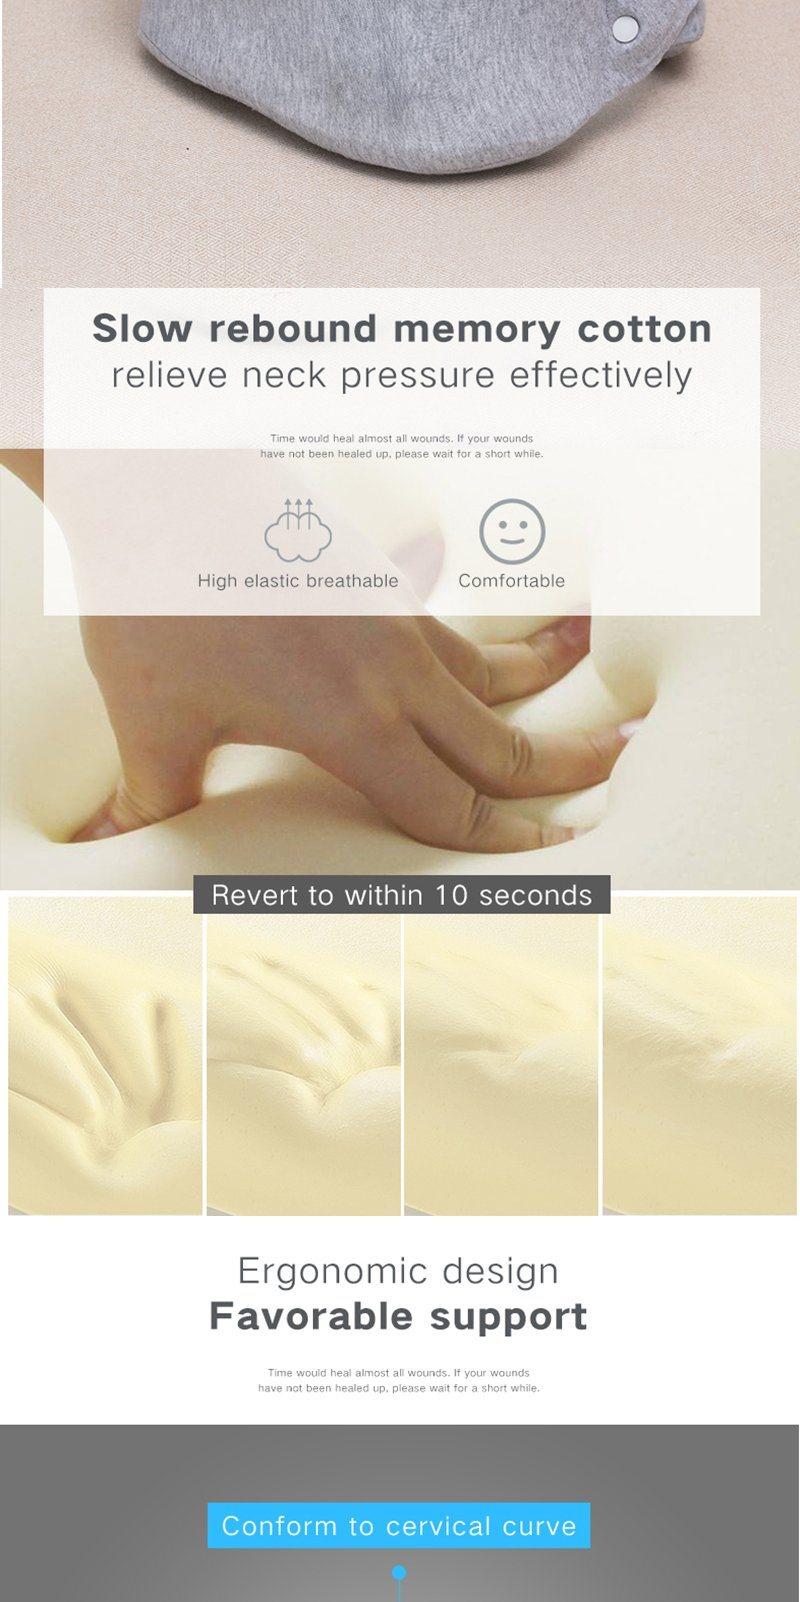 Hezheng 2020 Massage Chair Gift Neck Massage Fabric Memory Foam U Shape Pillow